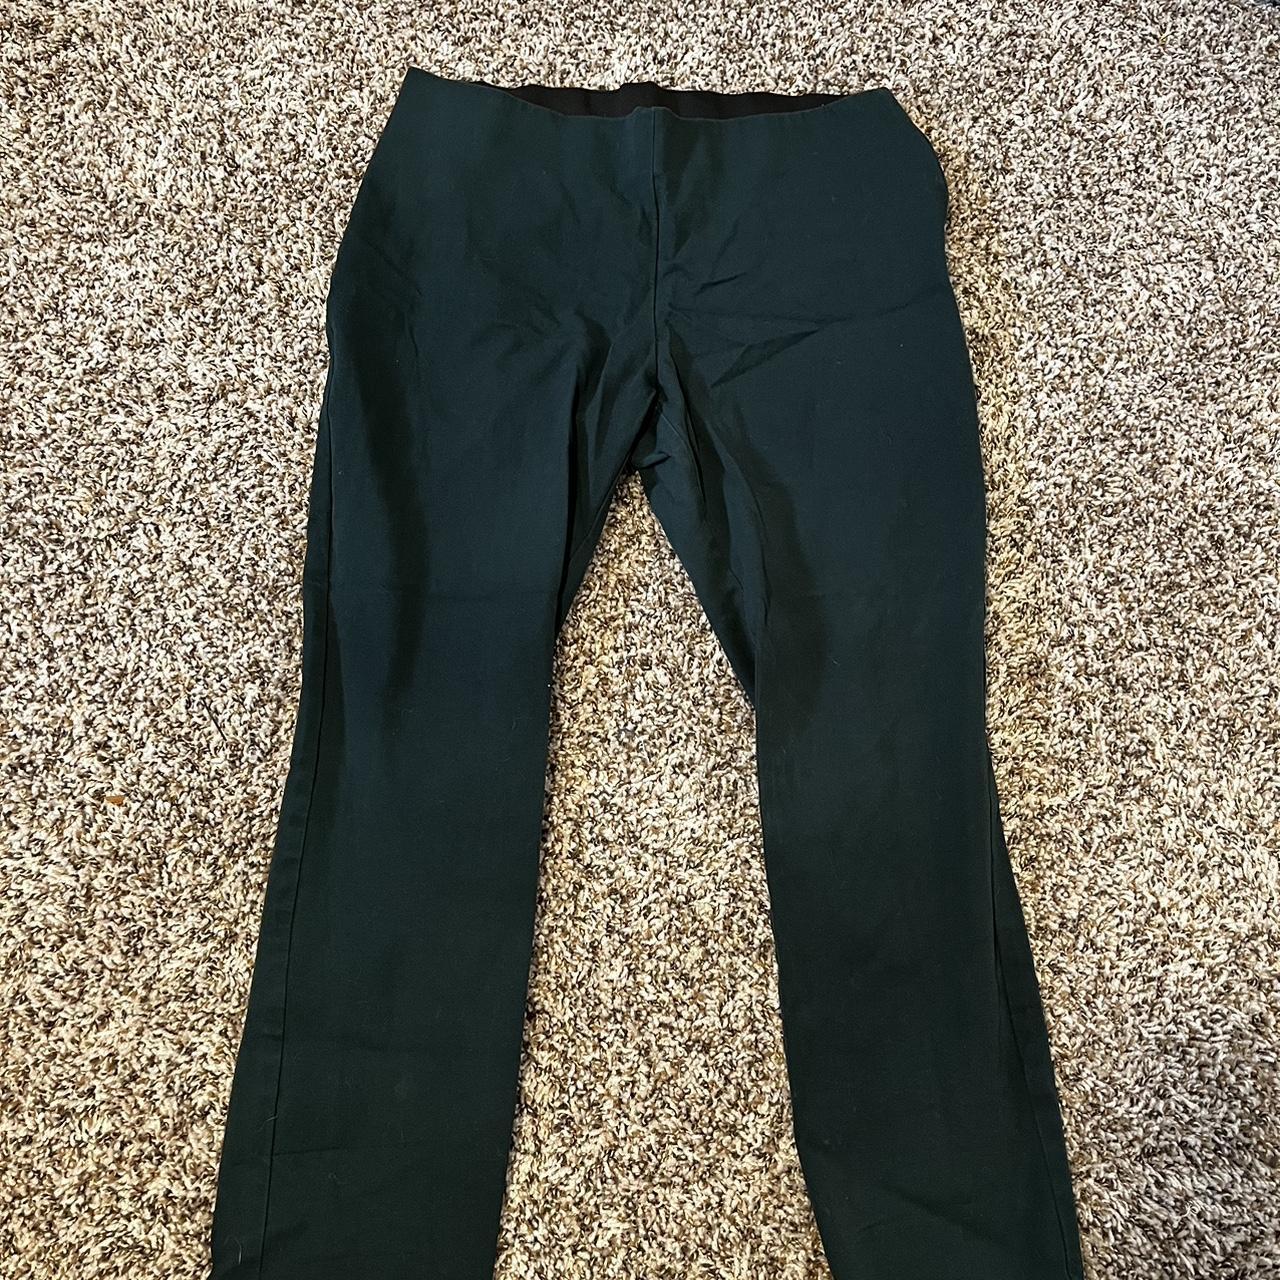 Size 10 dark green dress pants. Elastic band for - Depop